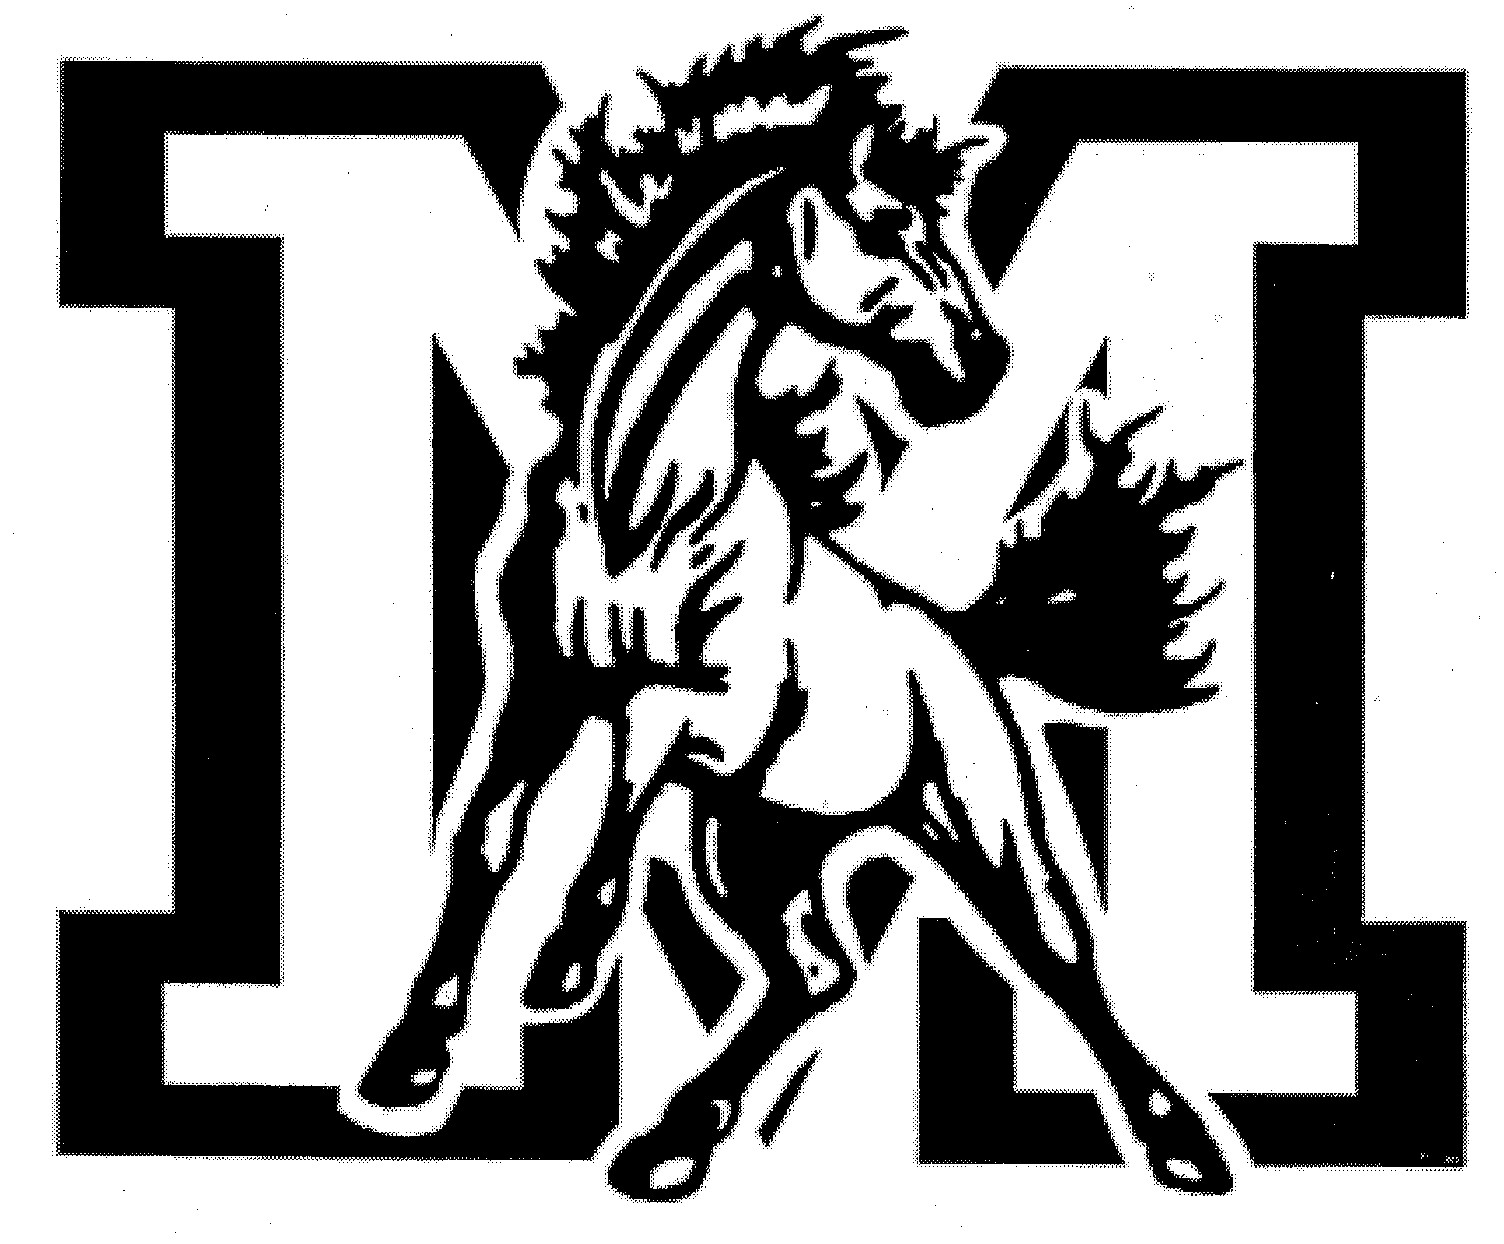 Free Clip Art Mustang Horse ~ Mustang Logo | Boddeswasusi